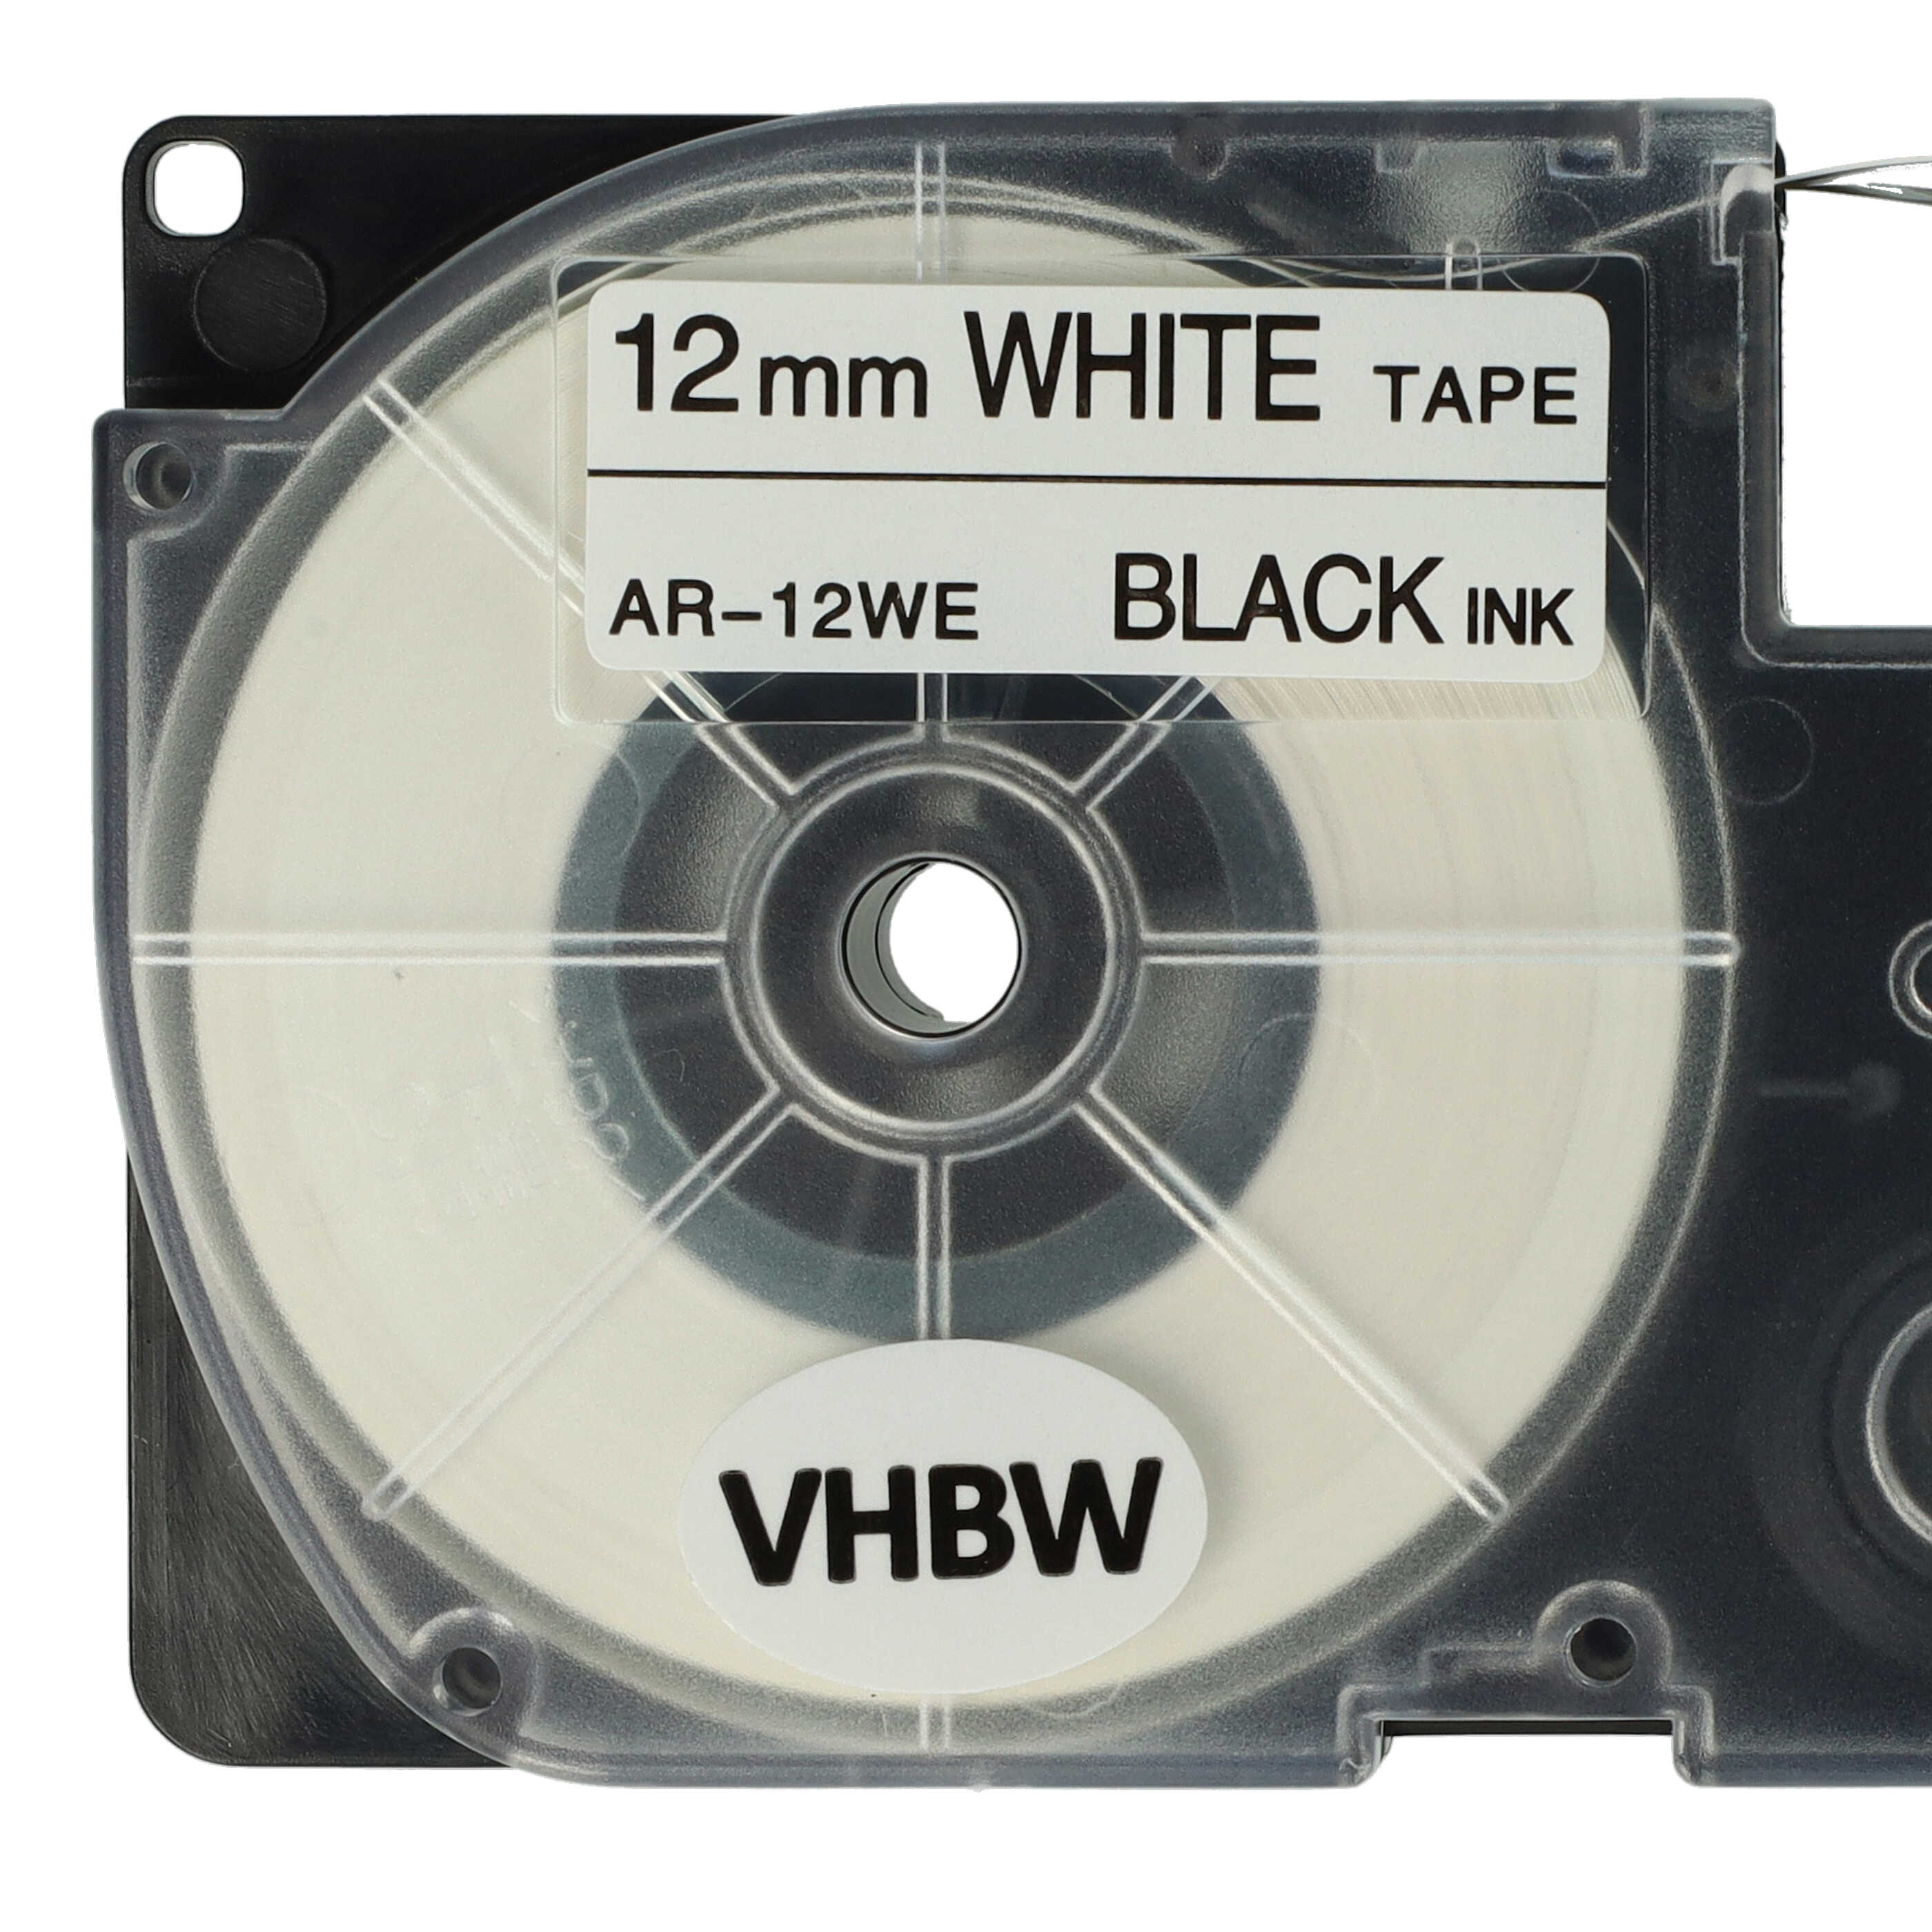 10x Cassetta nastro sostituisce Casio XR-12WE, XR-12WE1 per etichettatrice Casio 12mm nero su bianco